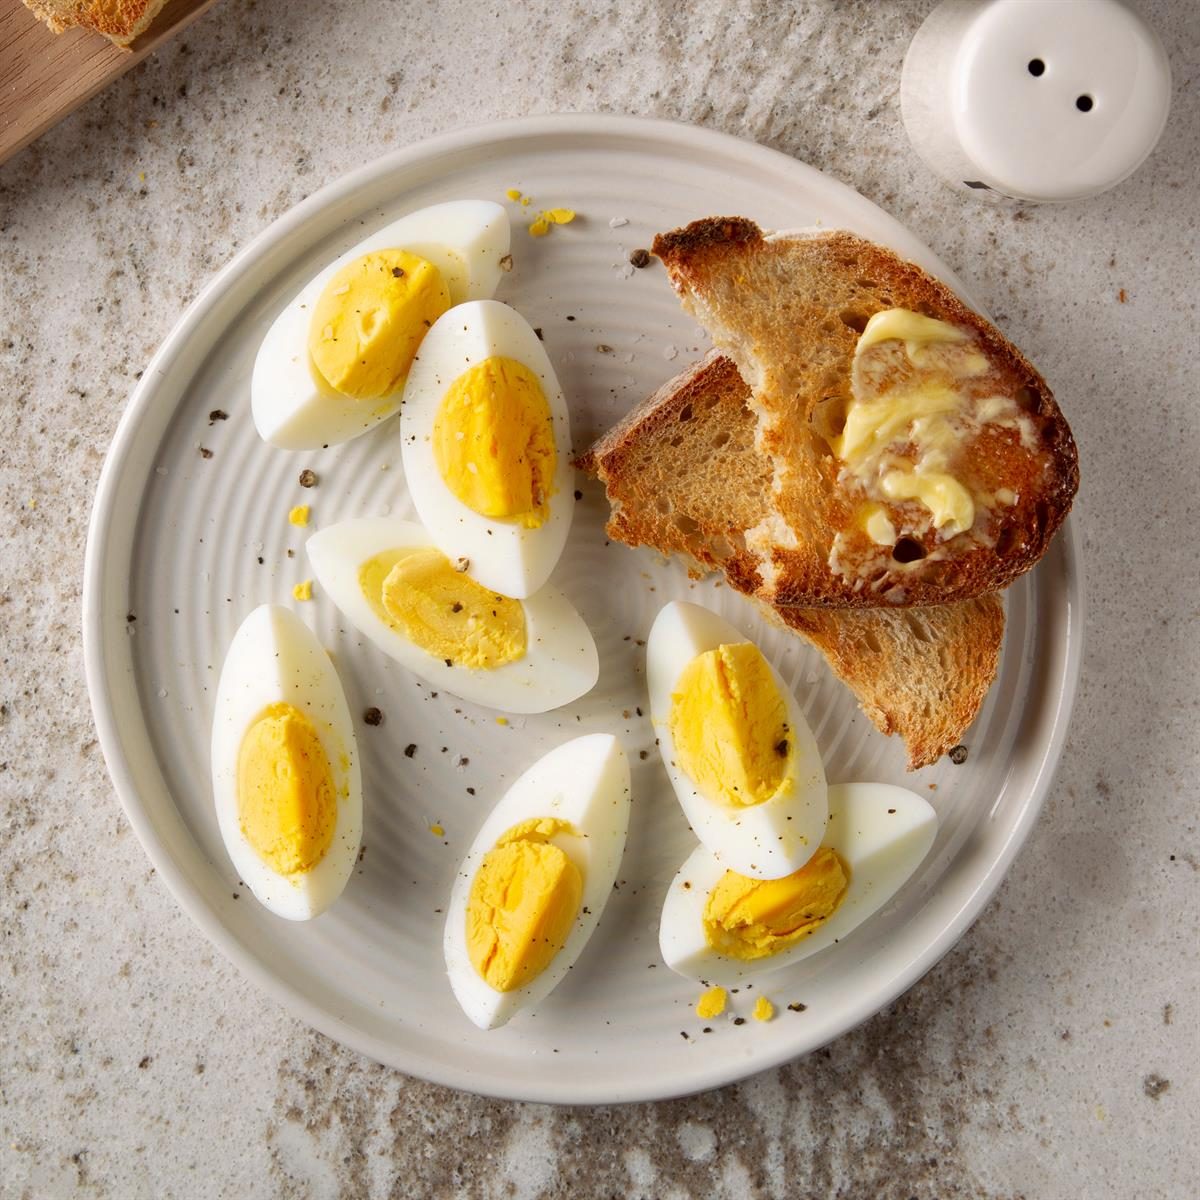 https://www.tasteofhome.com/wp-content/uploads/2018/01/Hard-Boiled-Eggs_EXPS_FT20_29222_F_0304_1.jpg?fit=700%2C1024